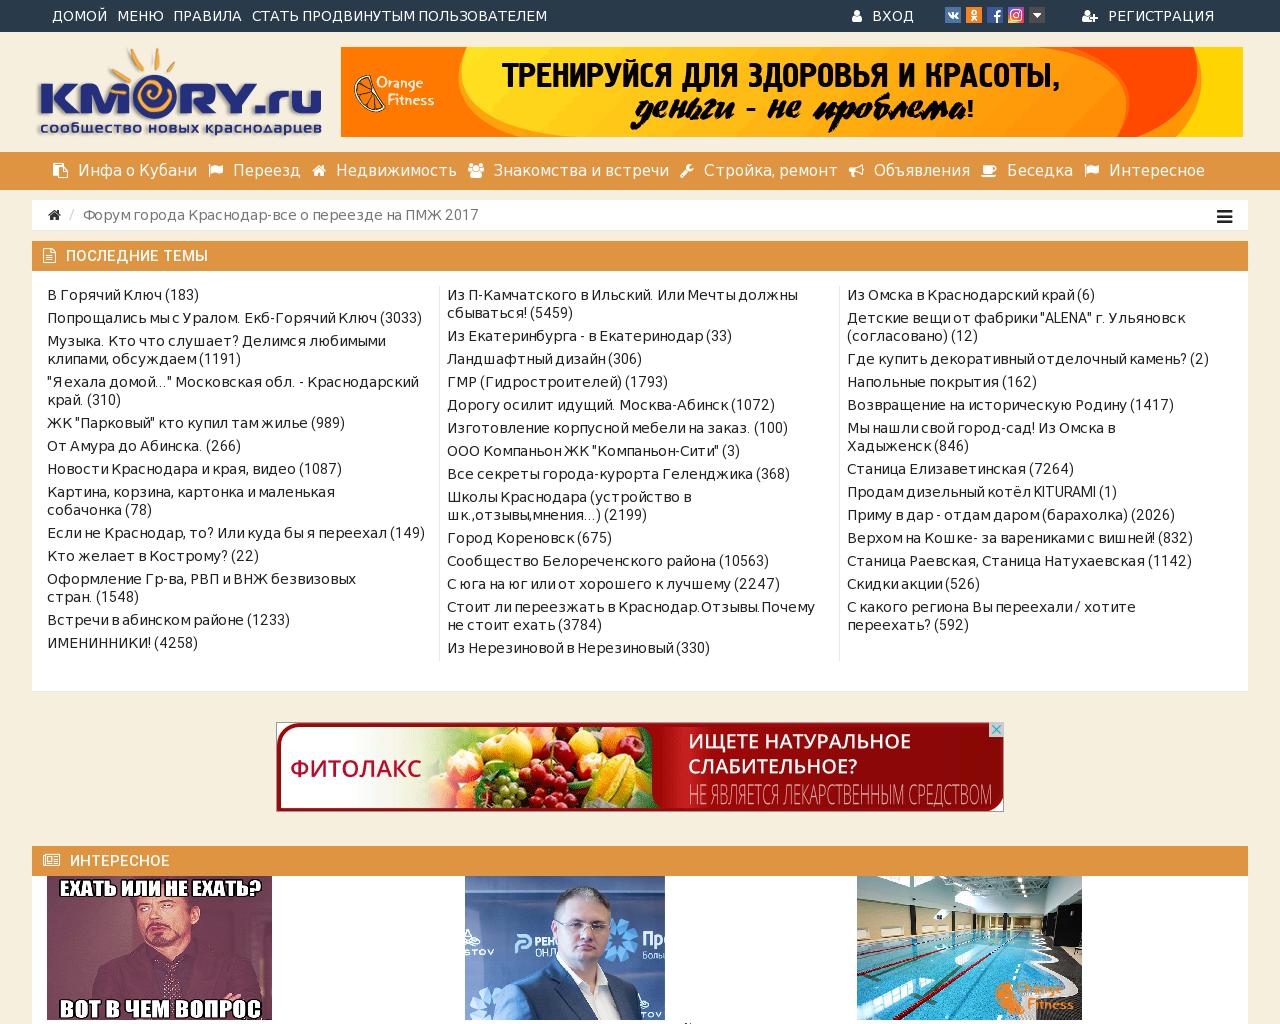 Изображение сайта kmory.ru в разрешении 1280x1024